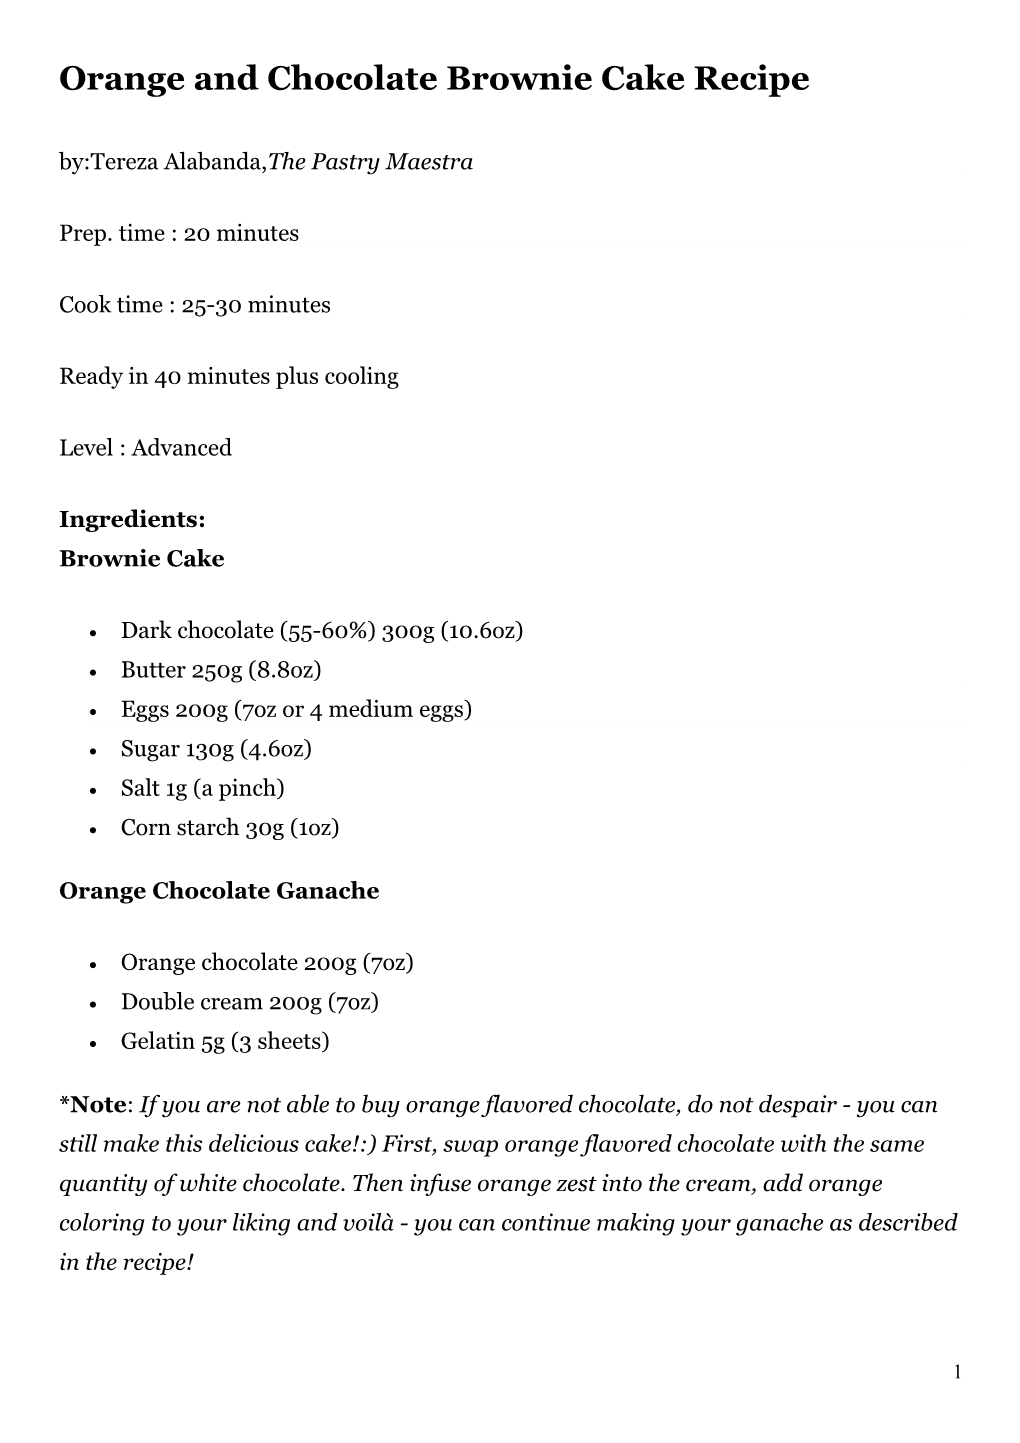 Orange and Chocolate Brownie Cake Recipe By:Tereza Alabanda,The Pastry Maestra